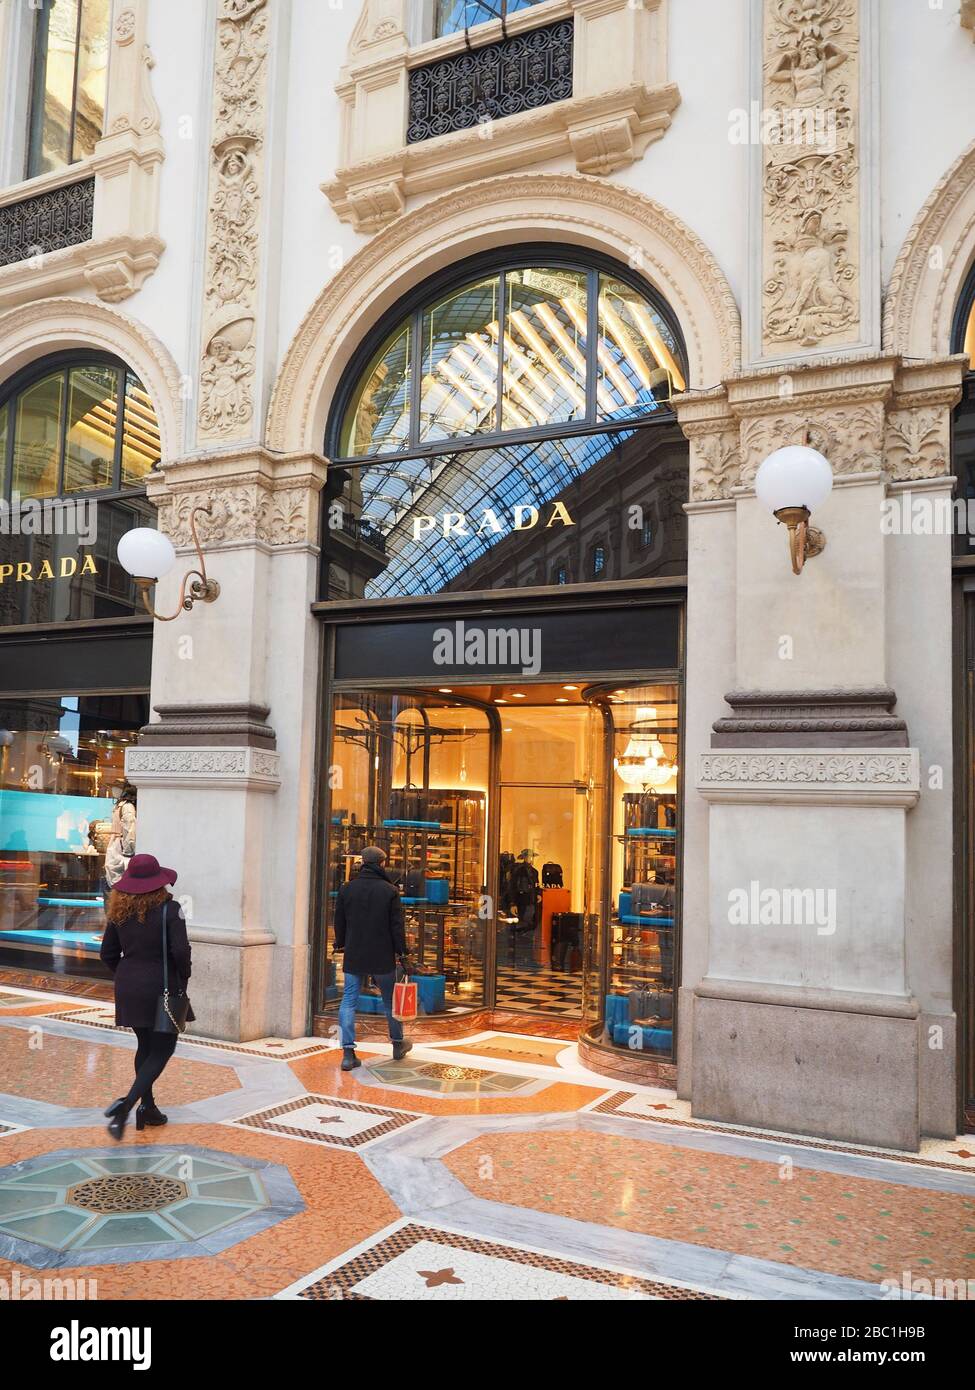 Prada fashion store, Galleria Vittorio Emanuele II gallery, Piazza del Duomo  square, Milan, Lombardy, Italy, Europe Stock Photo - Alamy